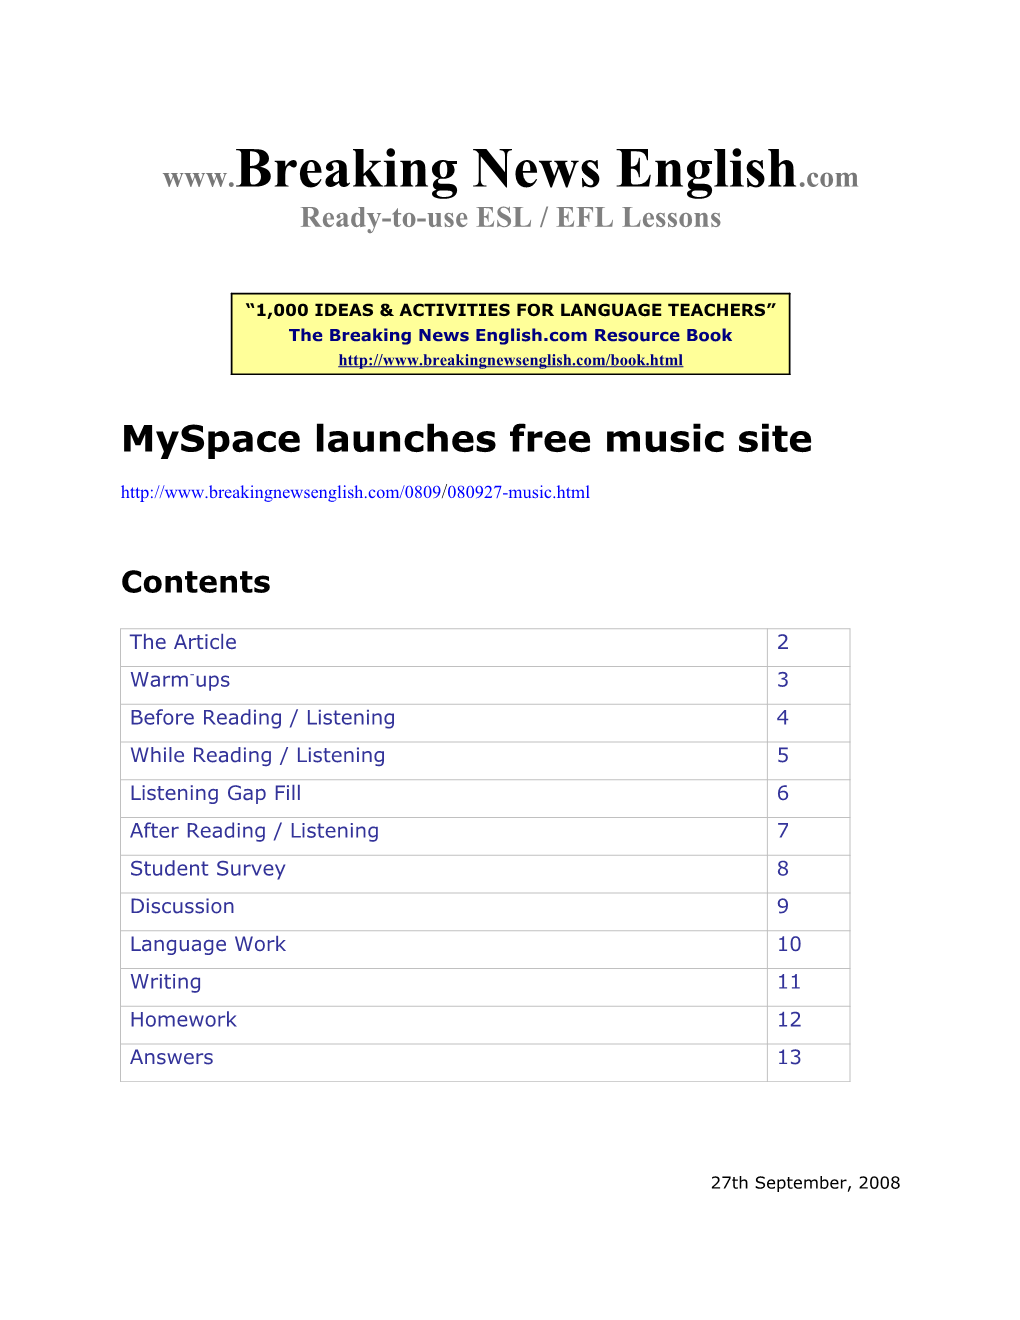 ESL Lesson: Myspace Launches Free Music Site